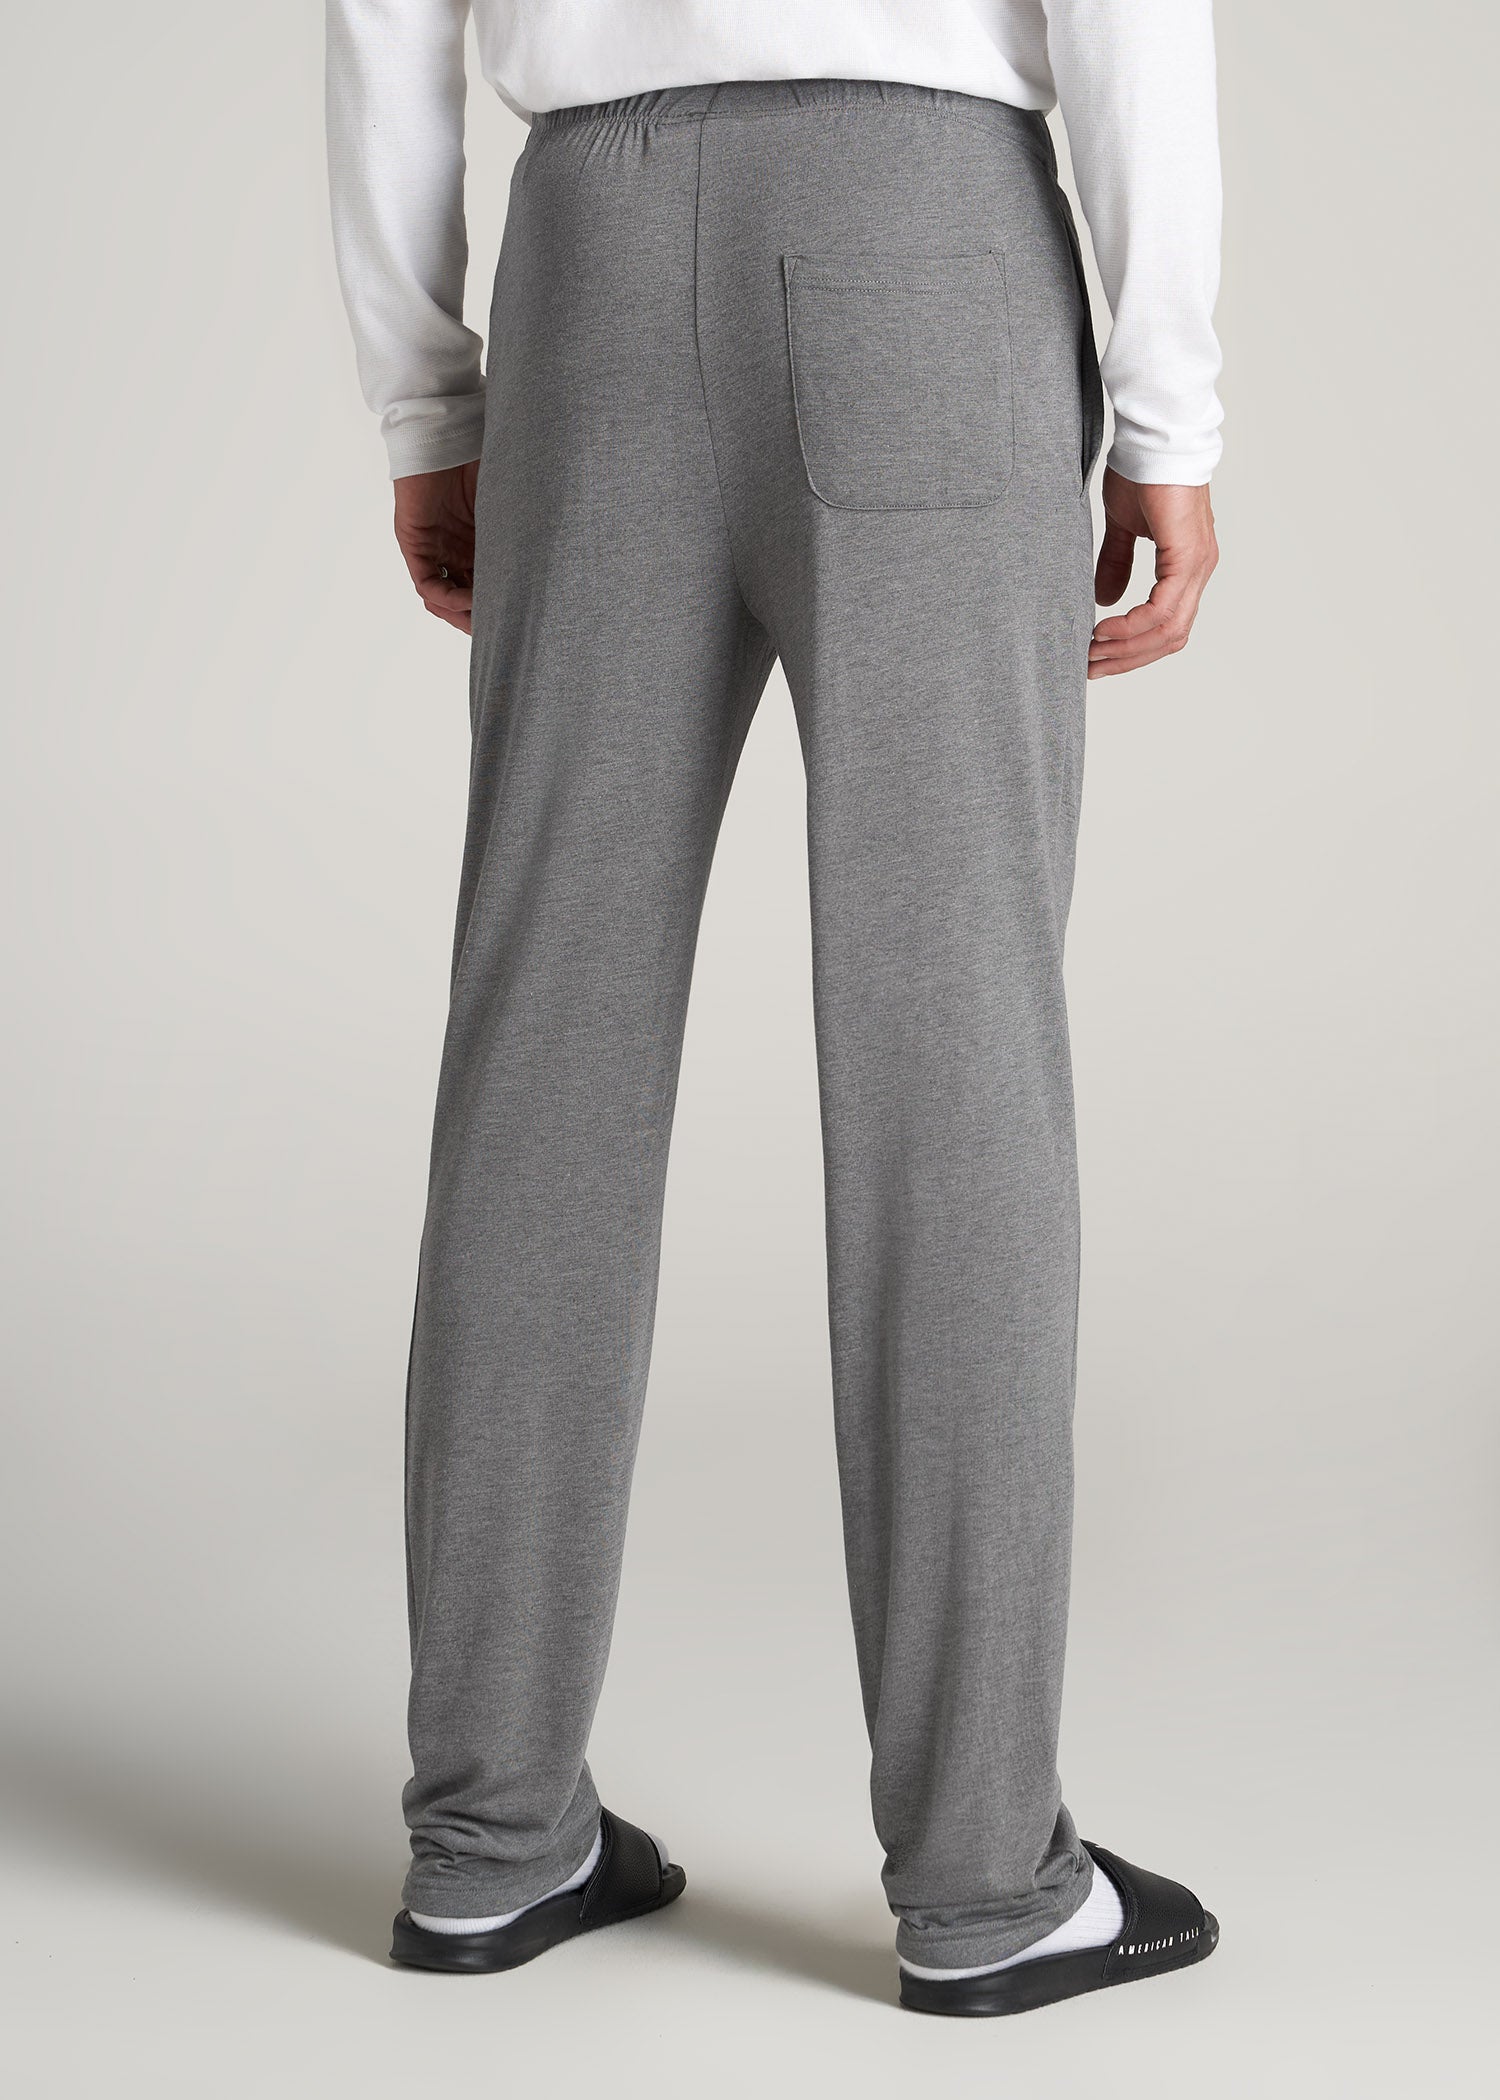        American-Tall-Men-Lounge-PajamaPants-CharcoalMix-back